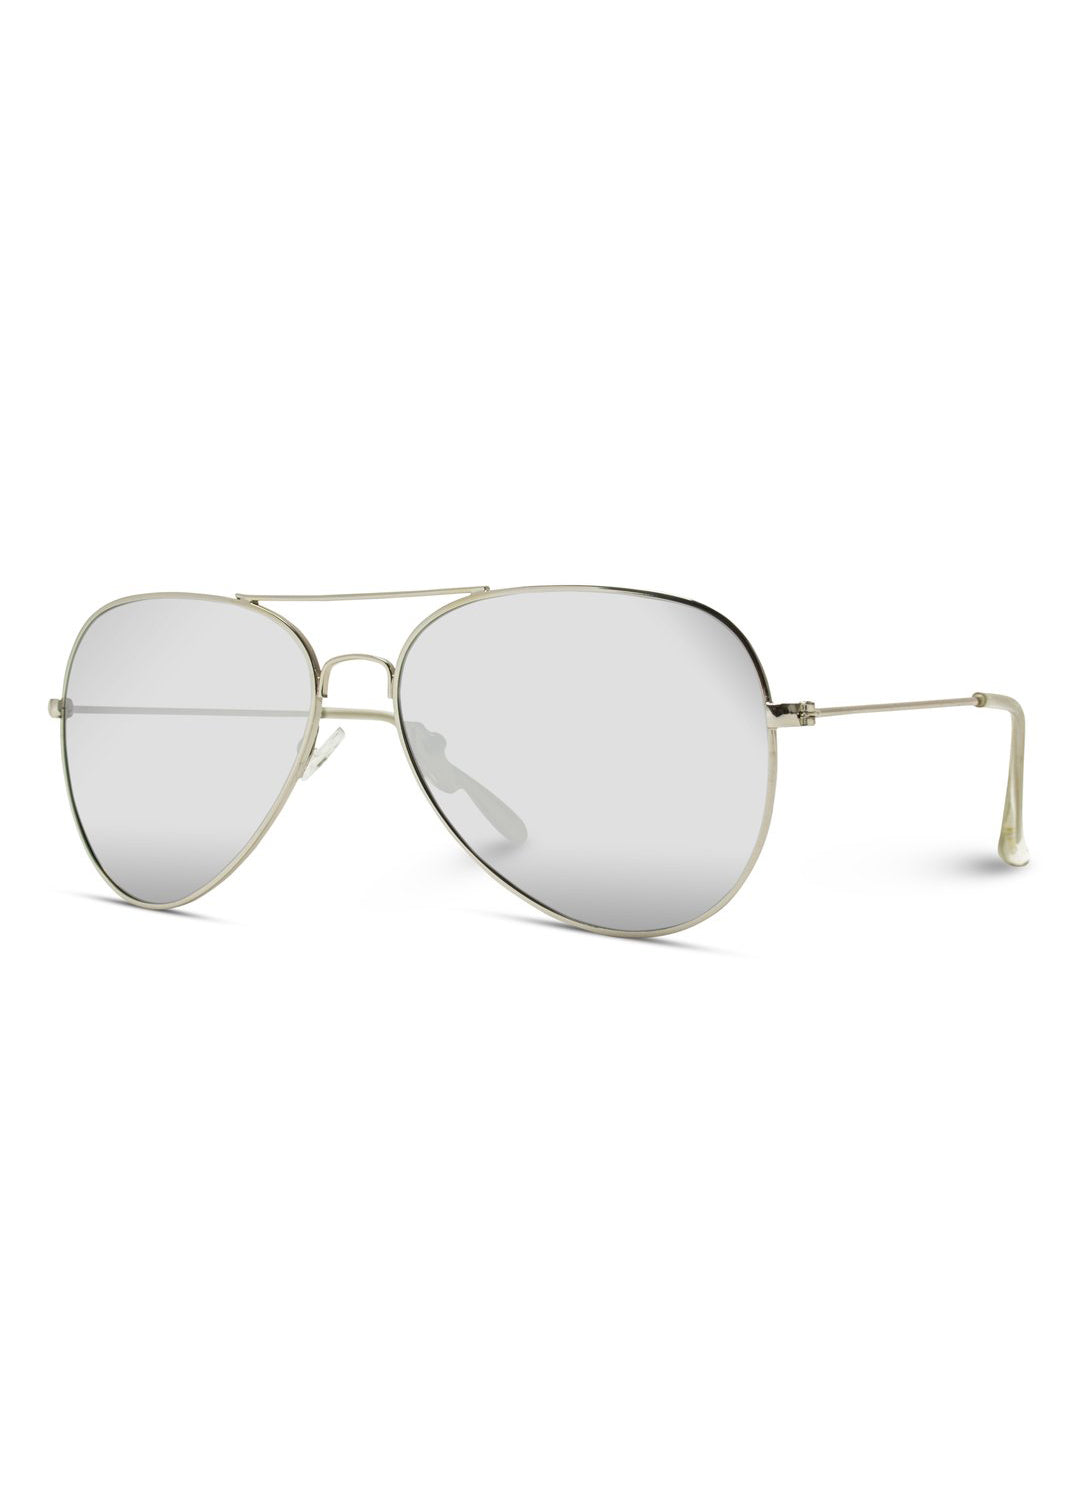 Silver Polarized Classic Aviator Sunglasses - FINAL SALE Accessories